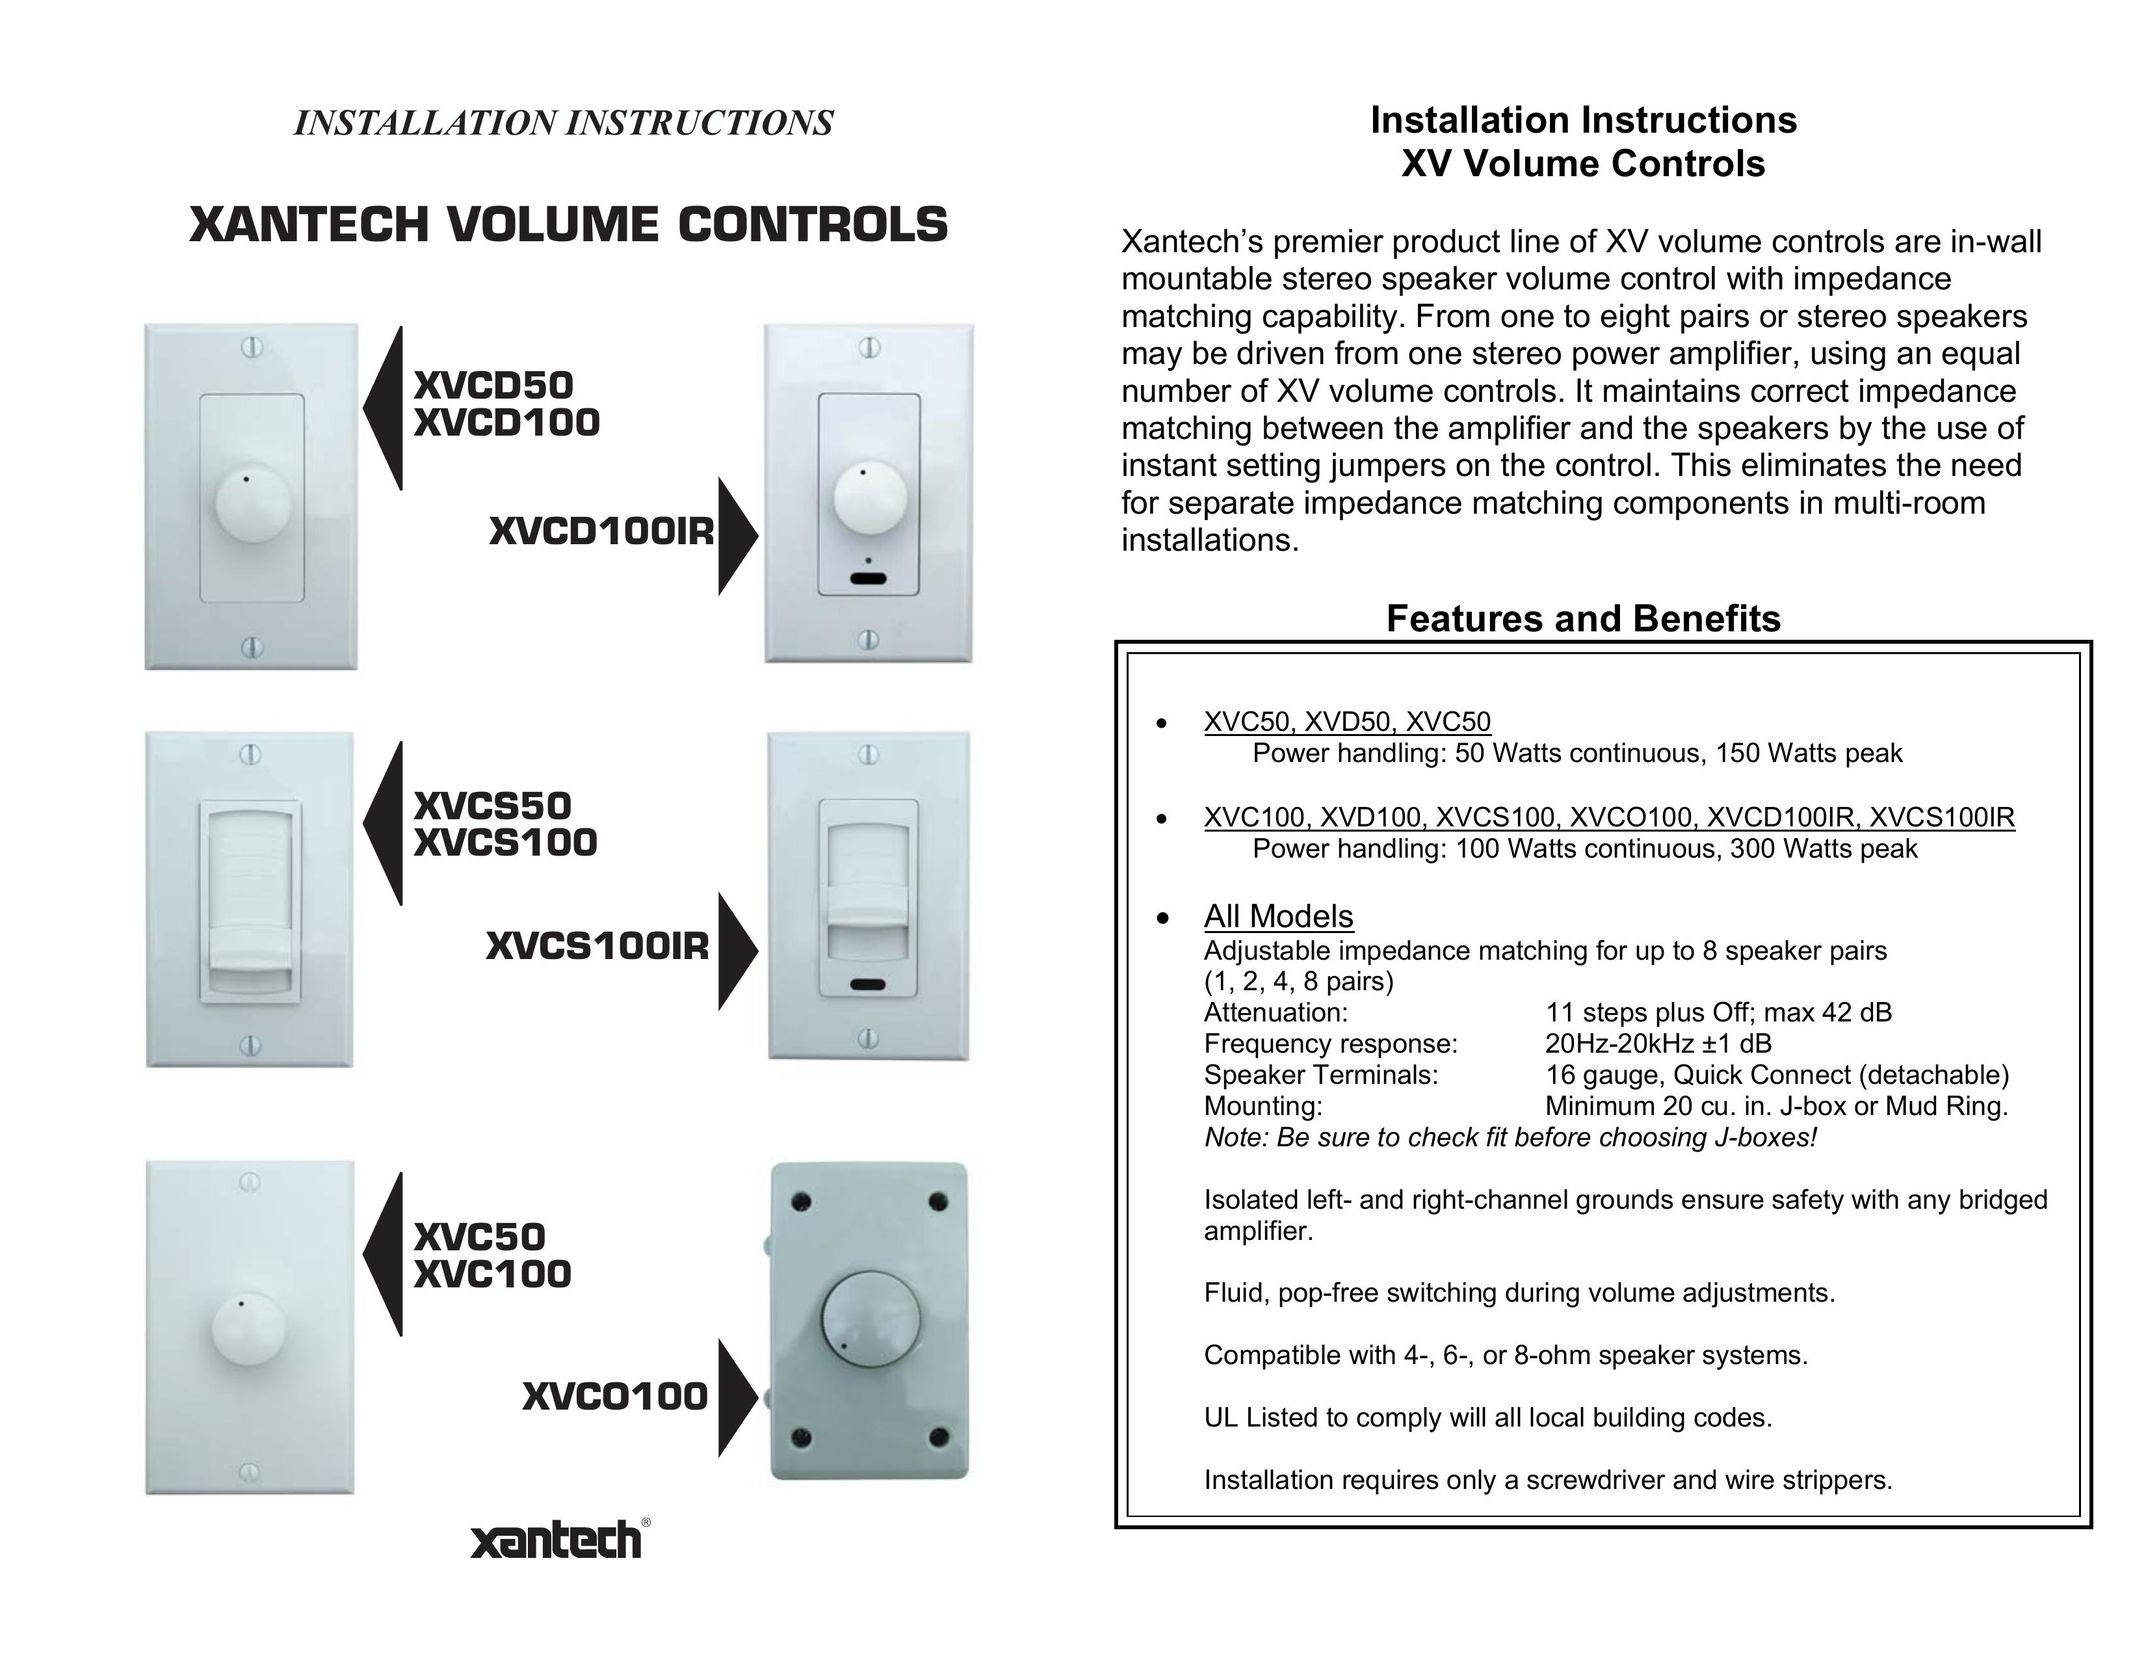 Xantech XVCD100IR Switch User Manual